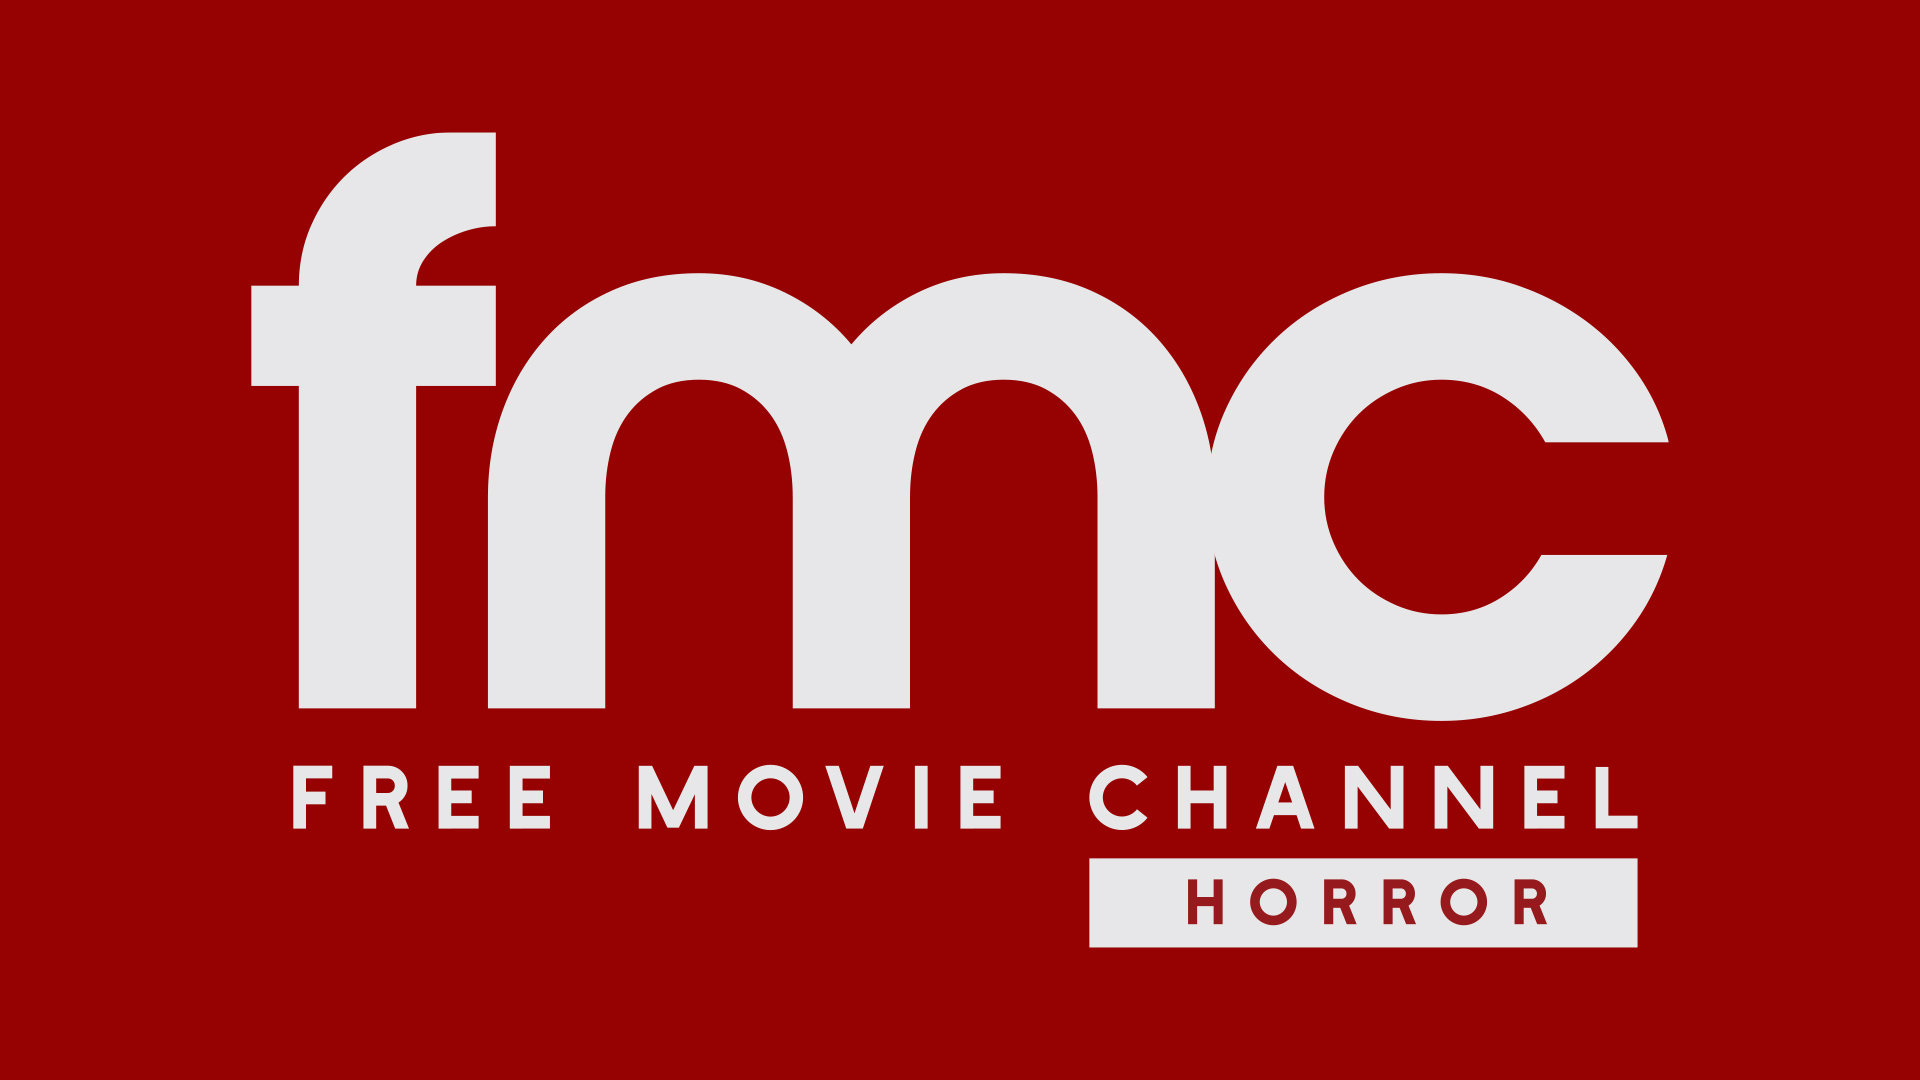 Free Movie Channel Horror logo